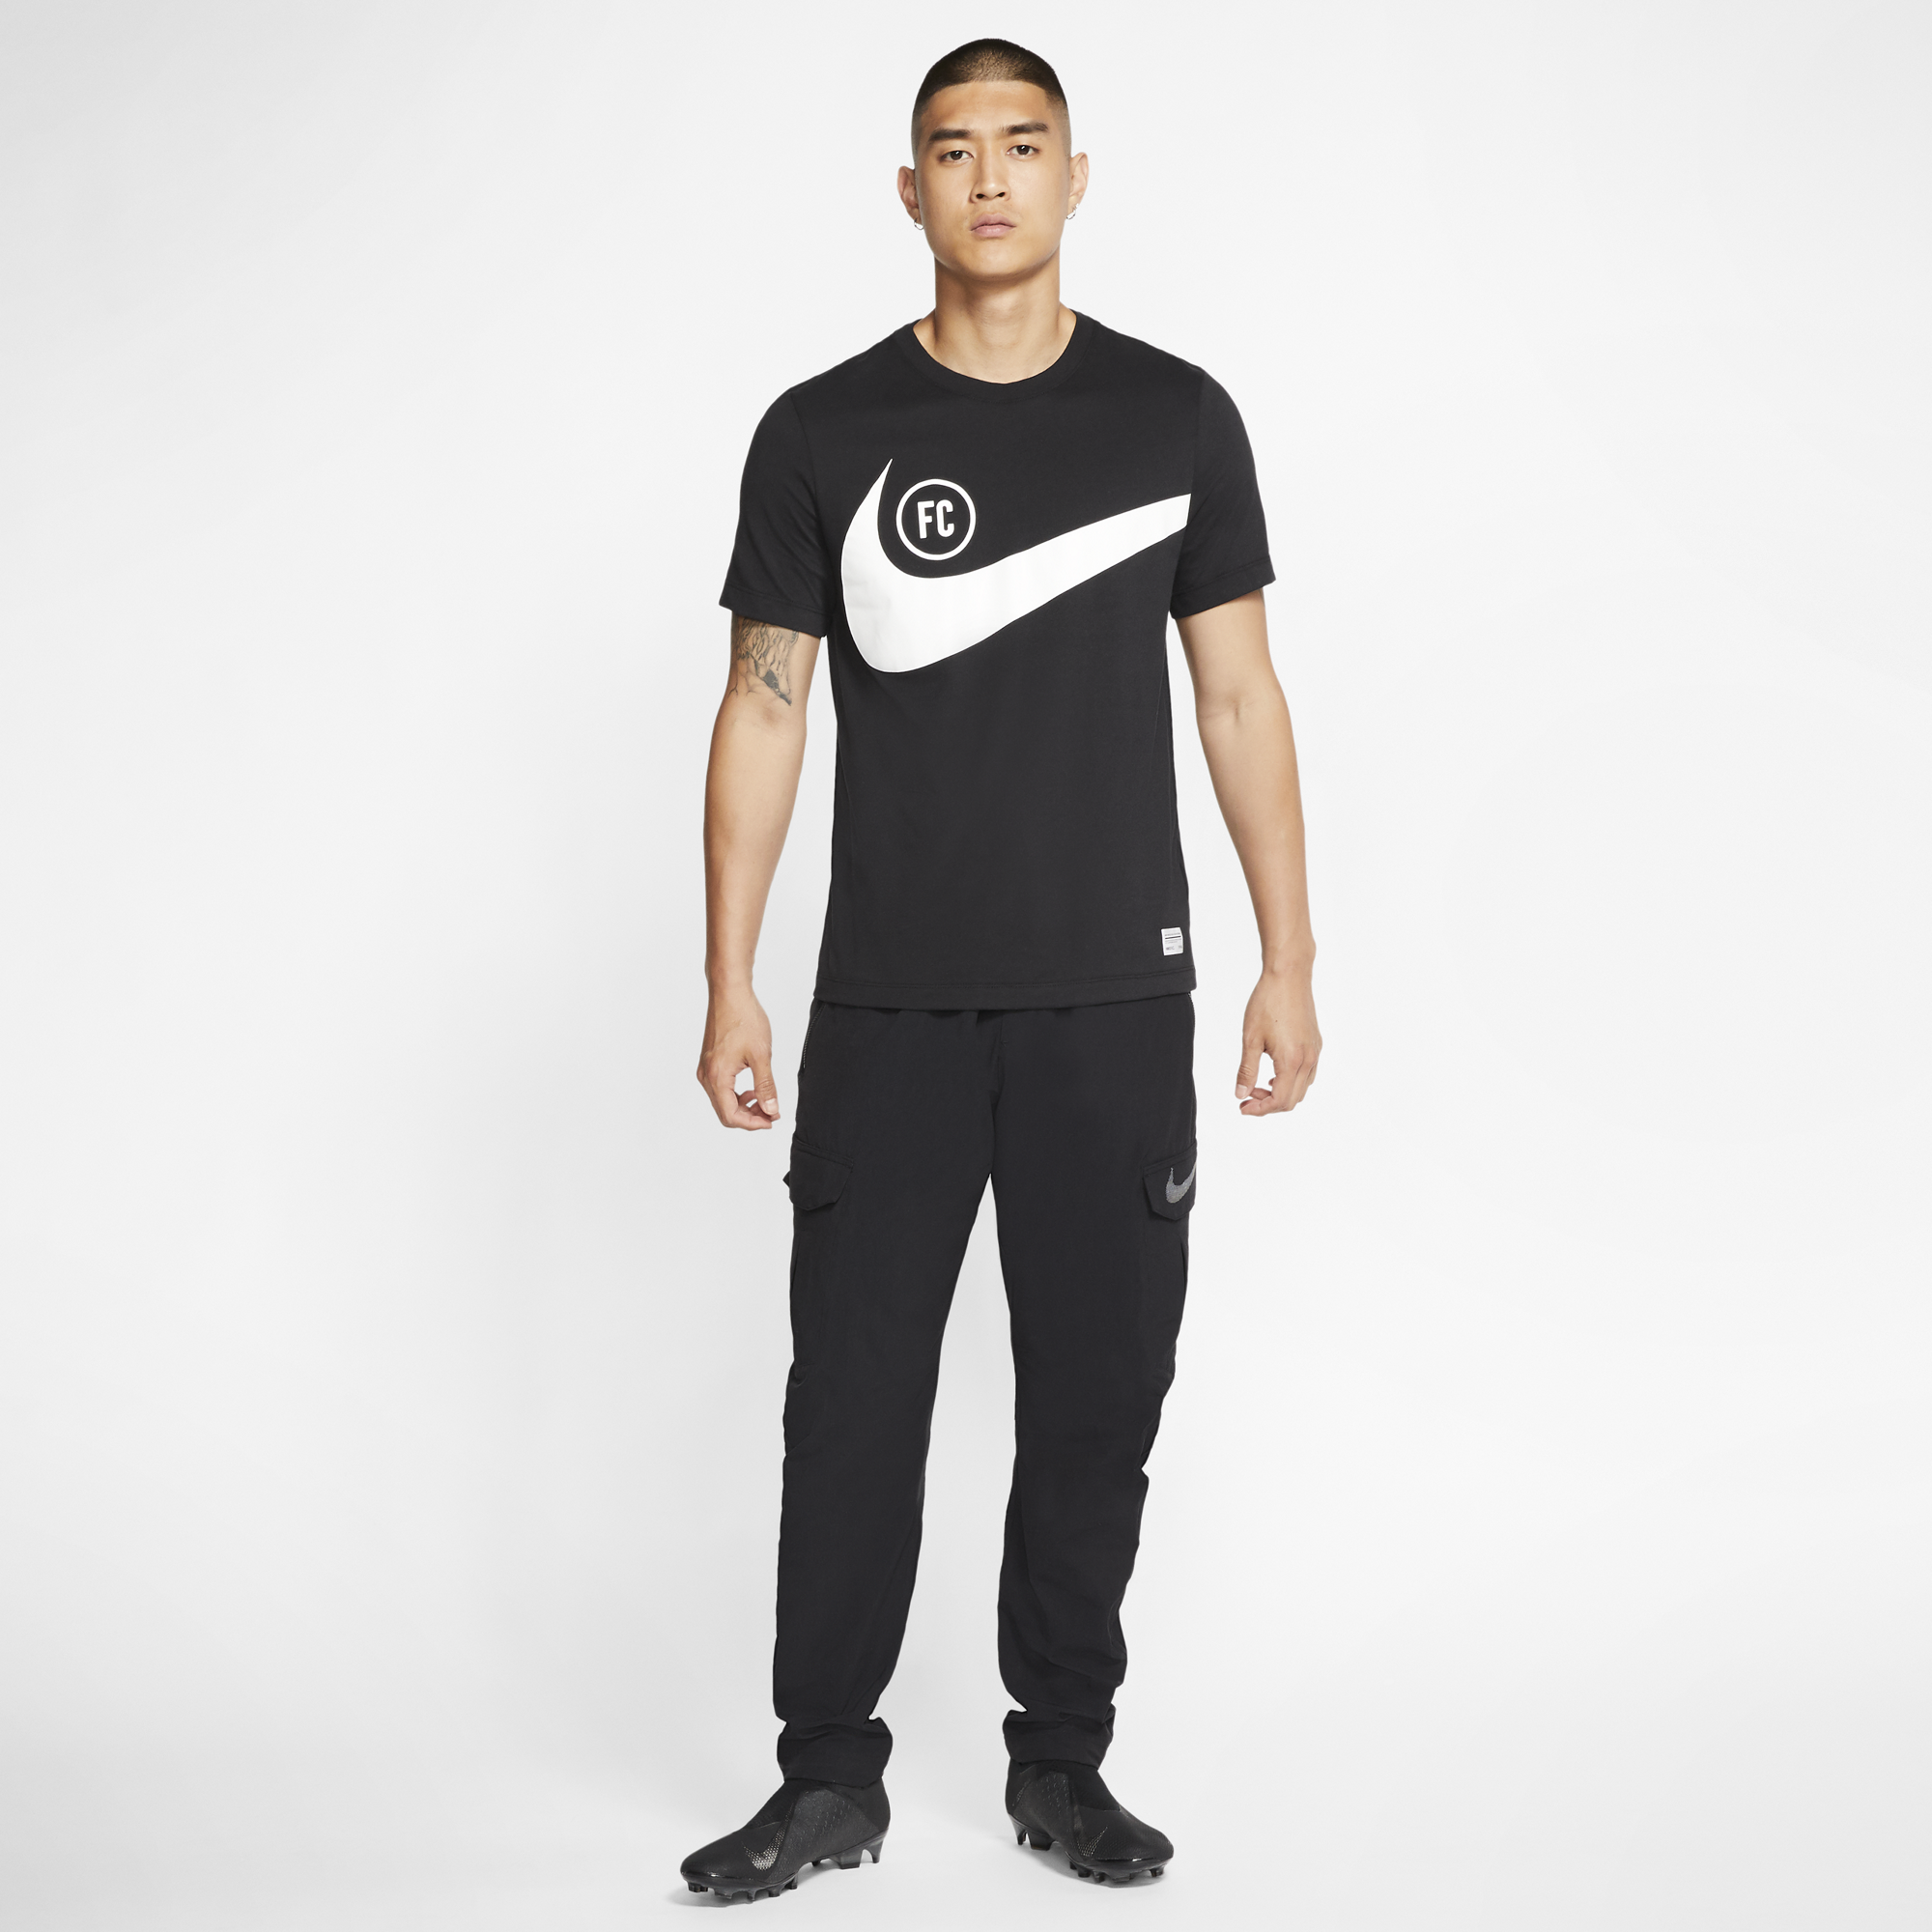 Nike F.C Dri-Fit Football T shirt – Juggles Football Culture